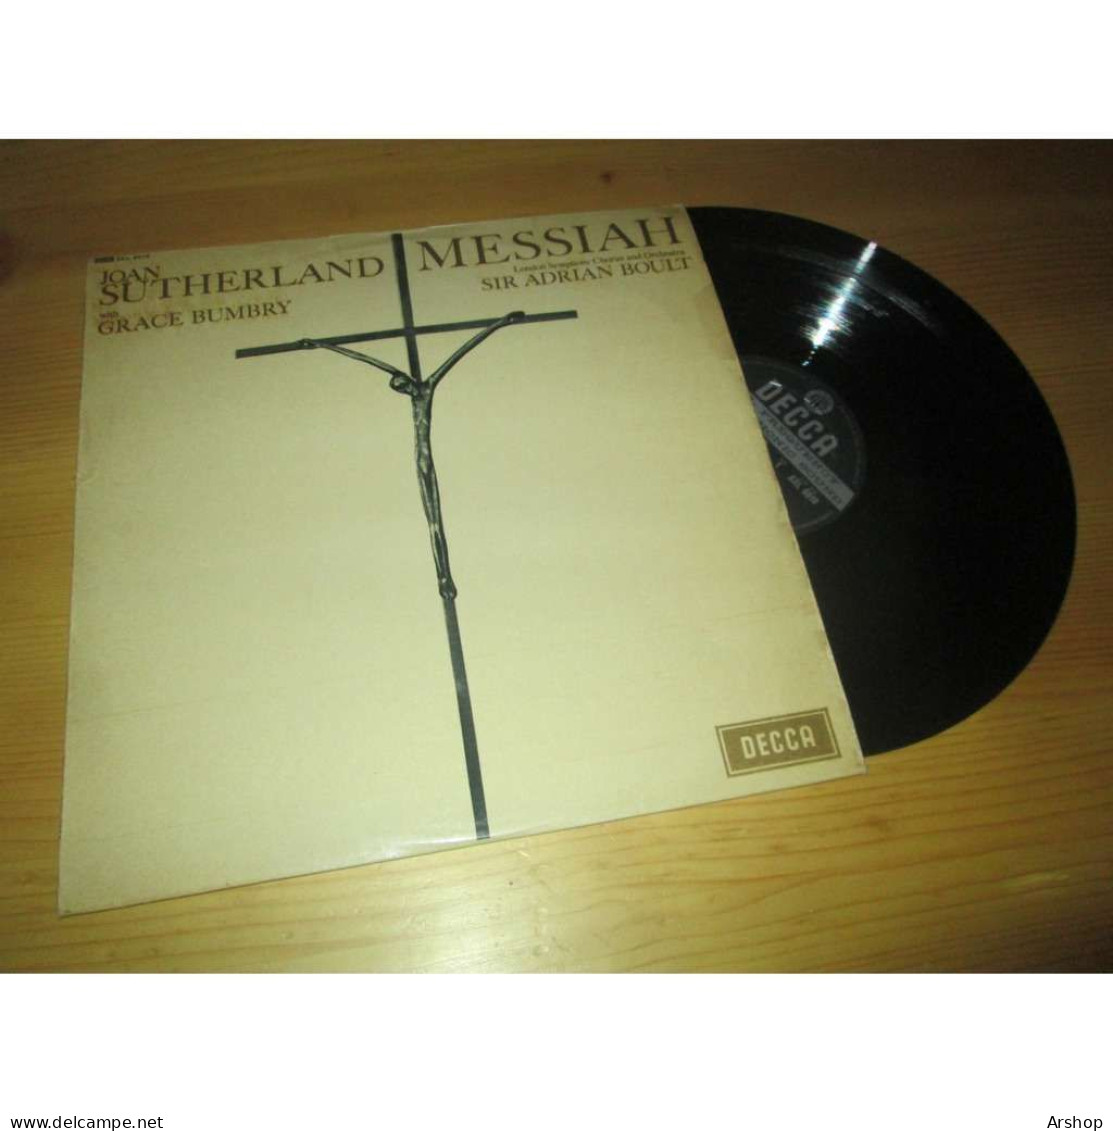 JOAN SUTHERLAND / GRACE BUMBRY / SIR ADRIAN BOULT Messiah HANDEL  - DECCA SXL 6010 UK Lp 1962 - Classical